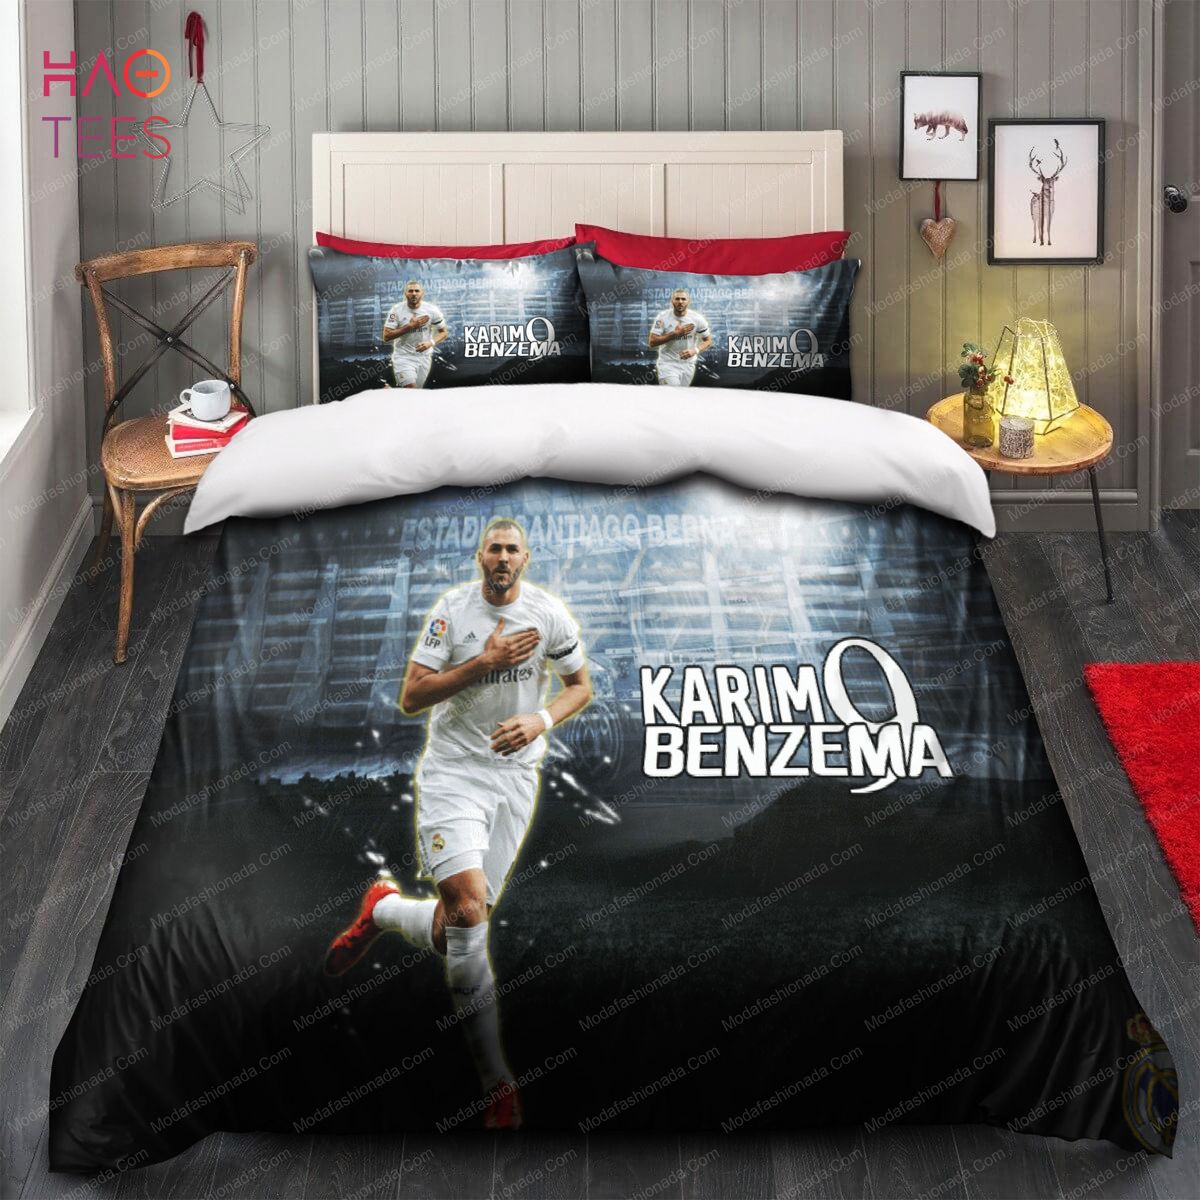 HOT Benzema Legend Real Madrid Laliga Bedding Sets Limited Edition